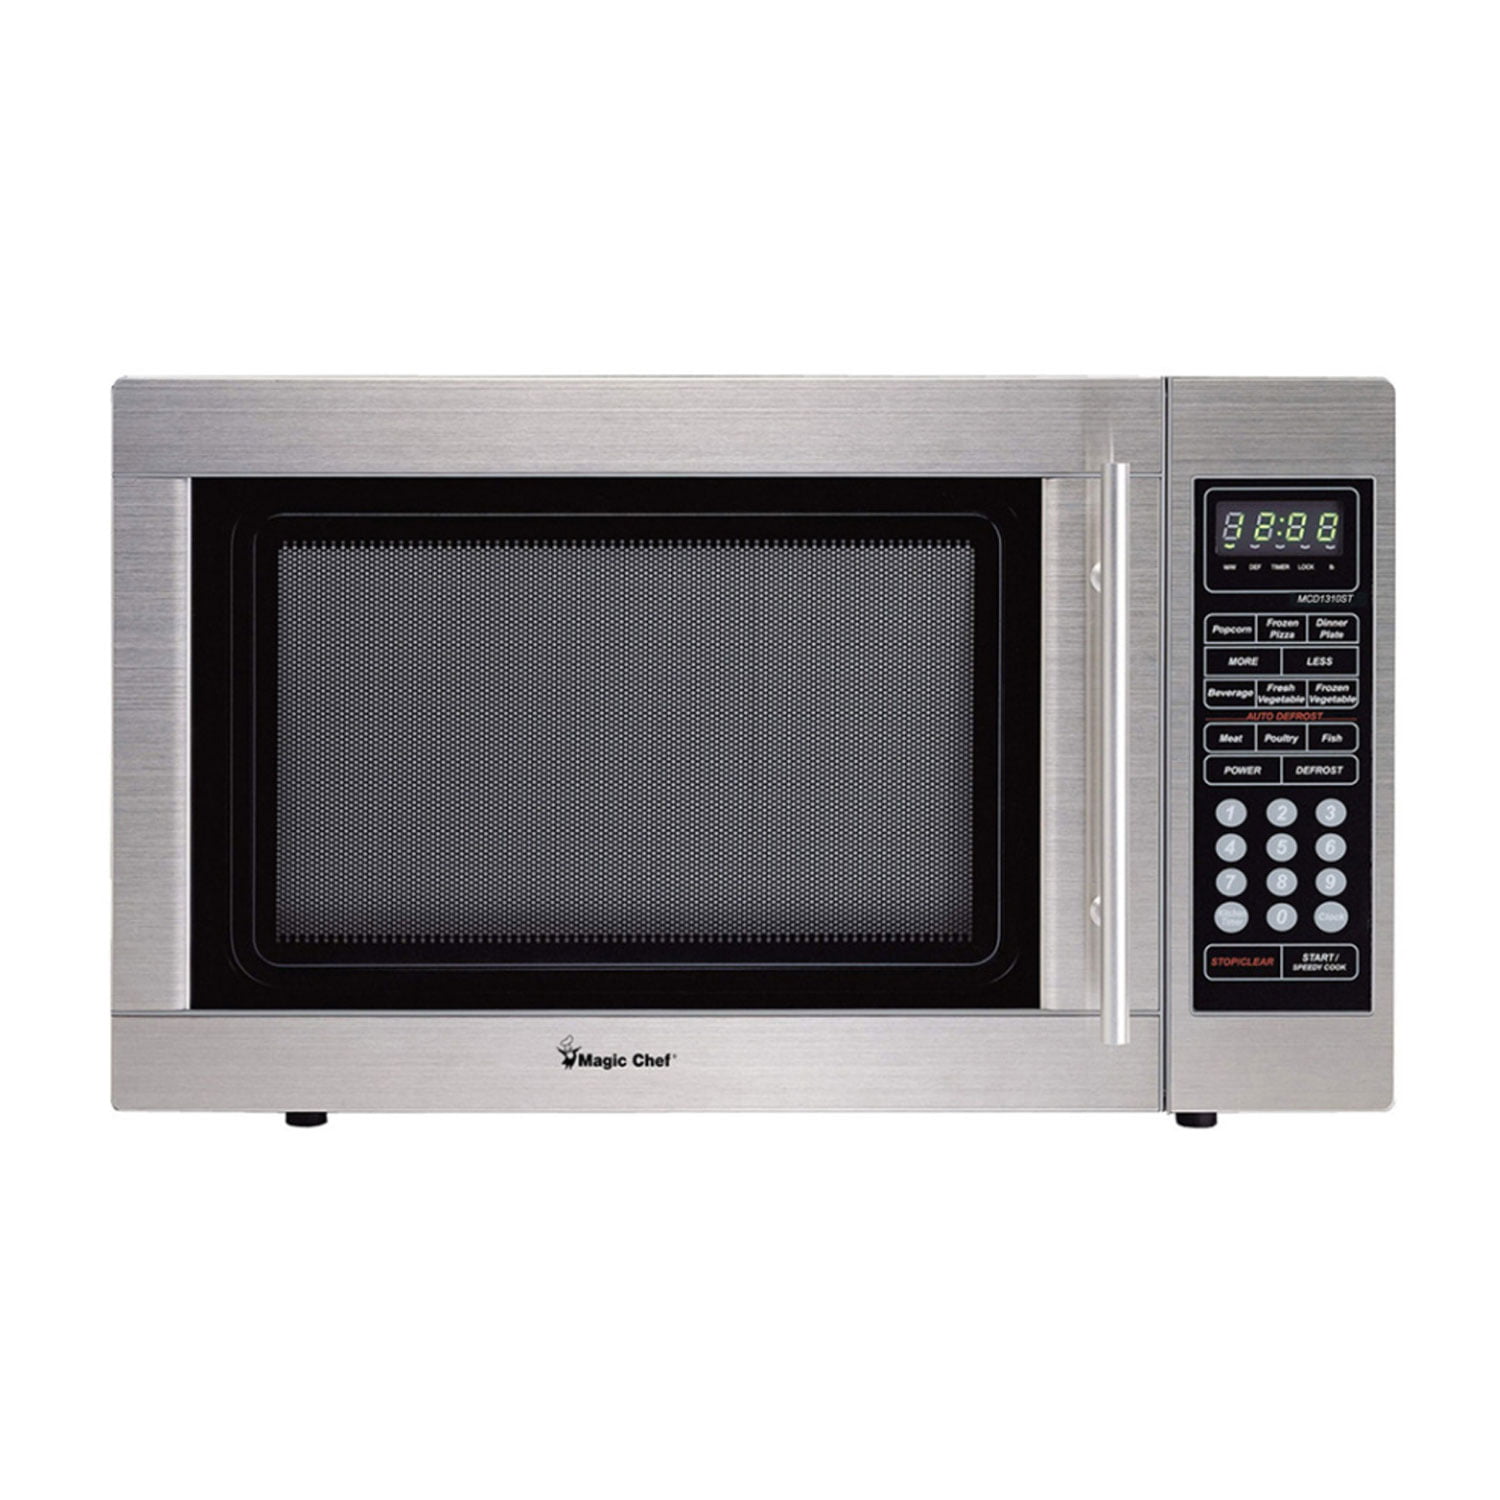 Magic Chef 1000 Watt 1.3 Cu Ft Microwave, Stainless Steel (Refurbished